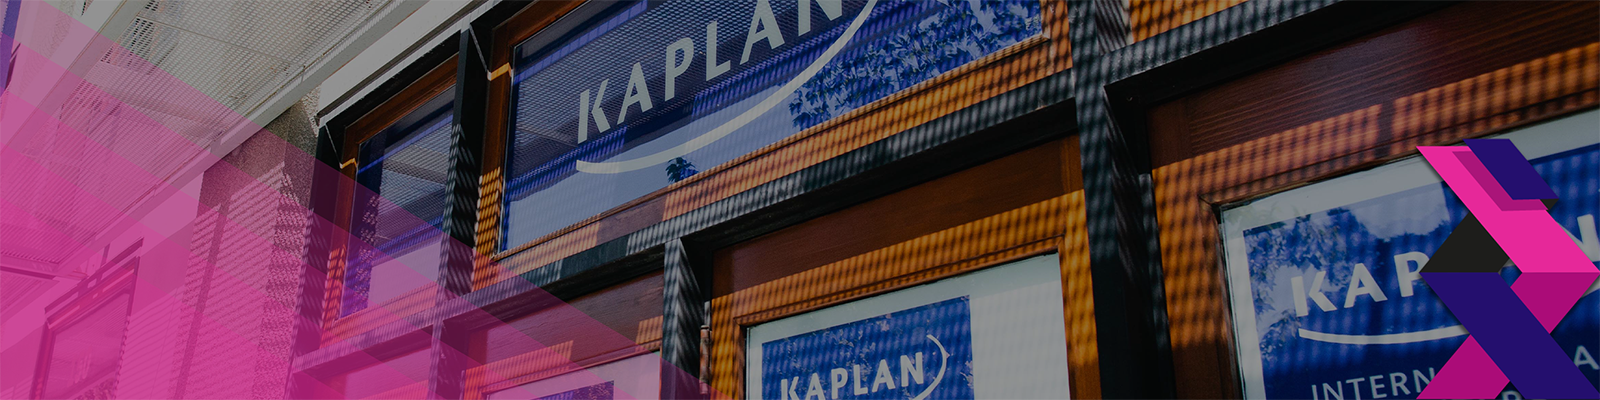 Kaplan International Languages - Vancouver görseli